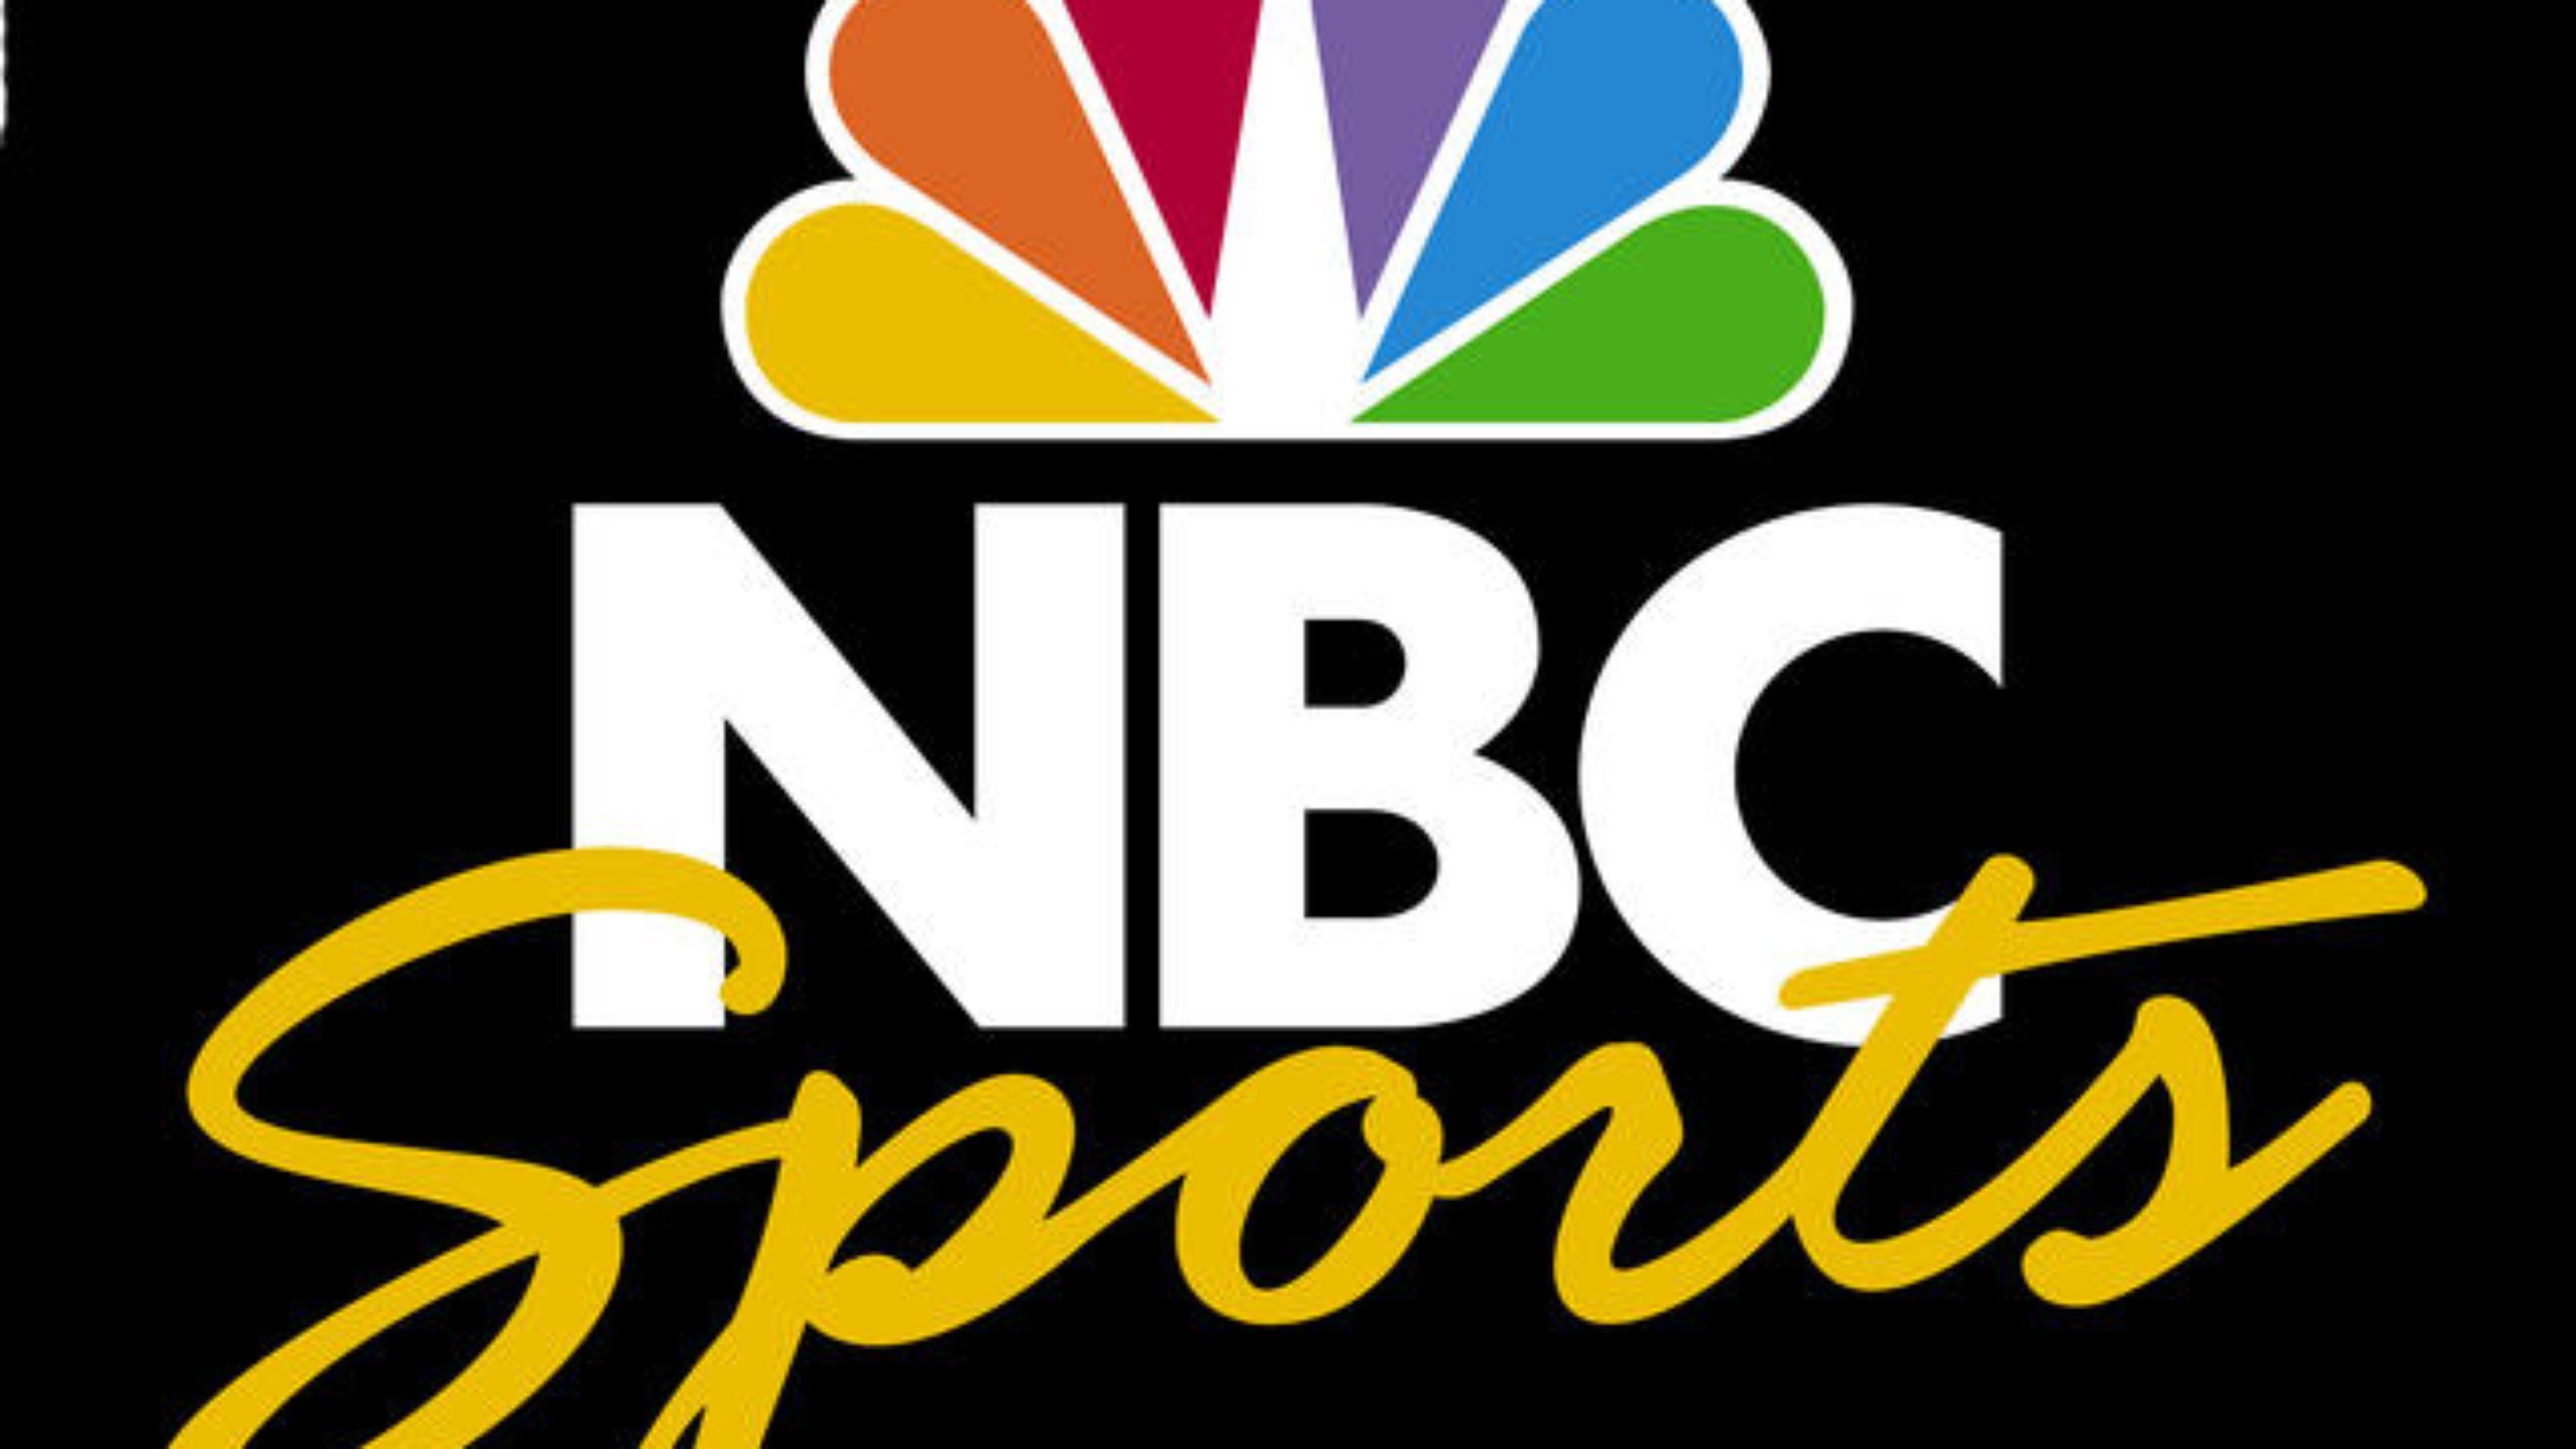 NBC Sports Logo - Nbc sports Logos